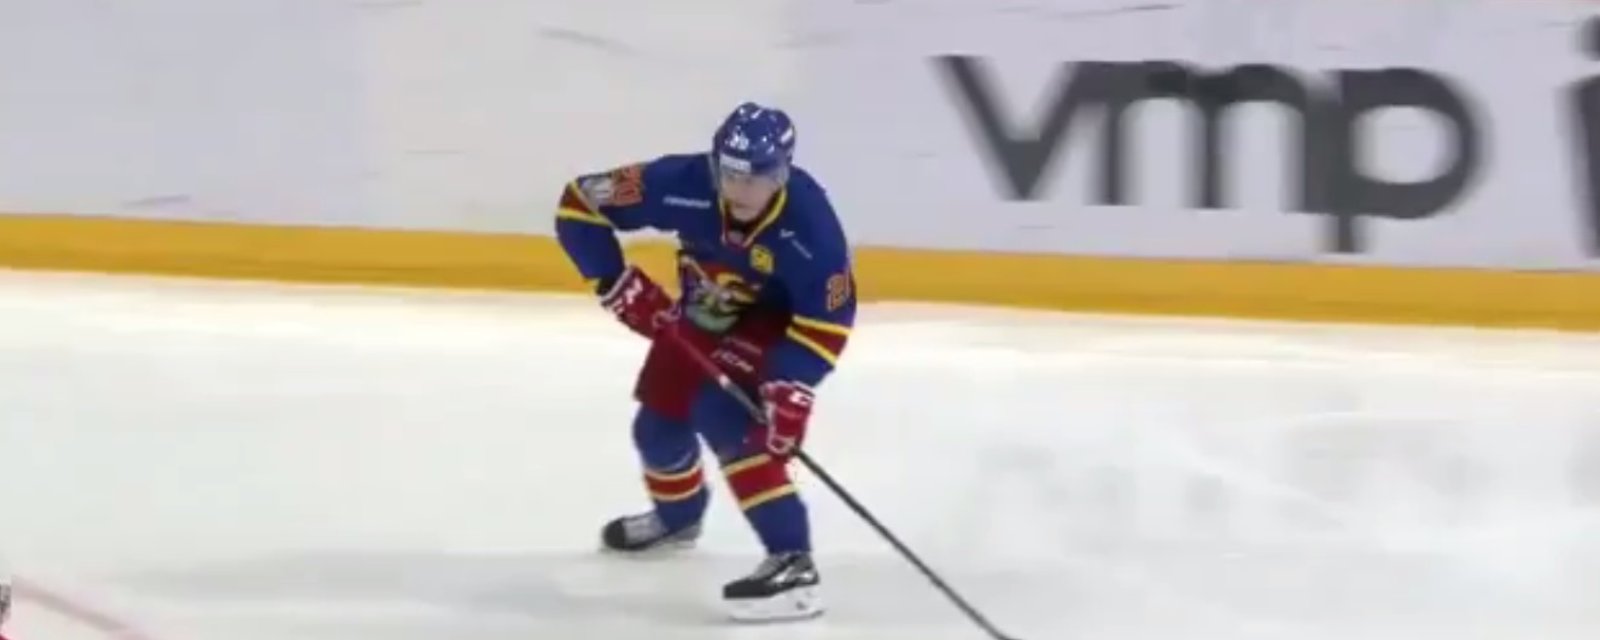 Must See: Predators' first-round draft pick Eeli Tolvanen scores another hat trick in KHL